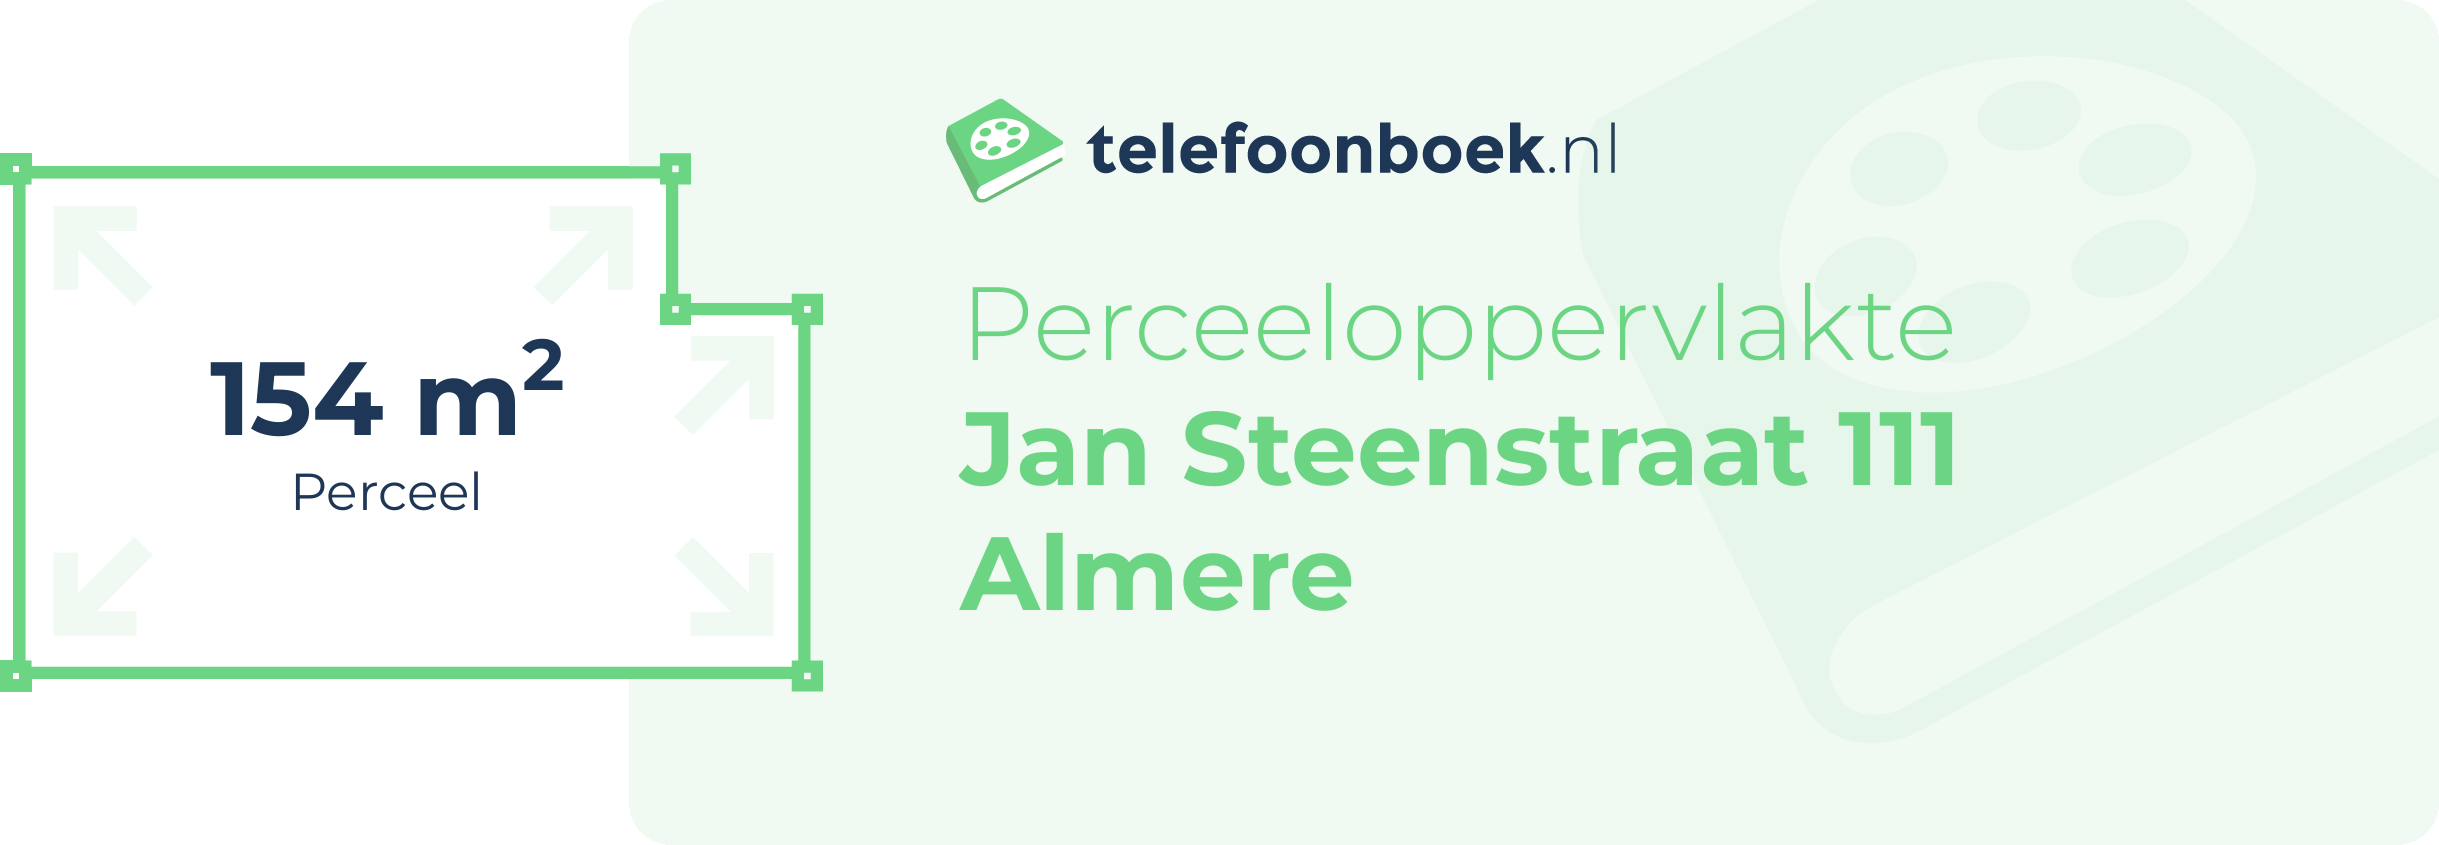 Perceeloppervlakte Jan Steenstraat 111 Almere